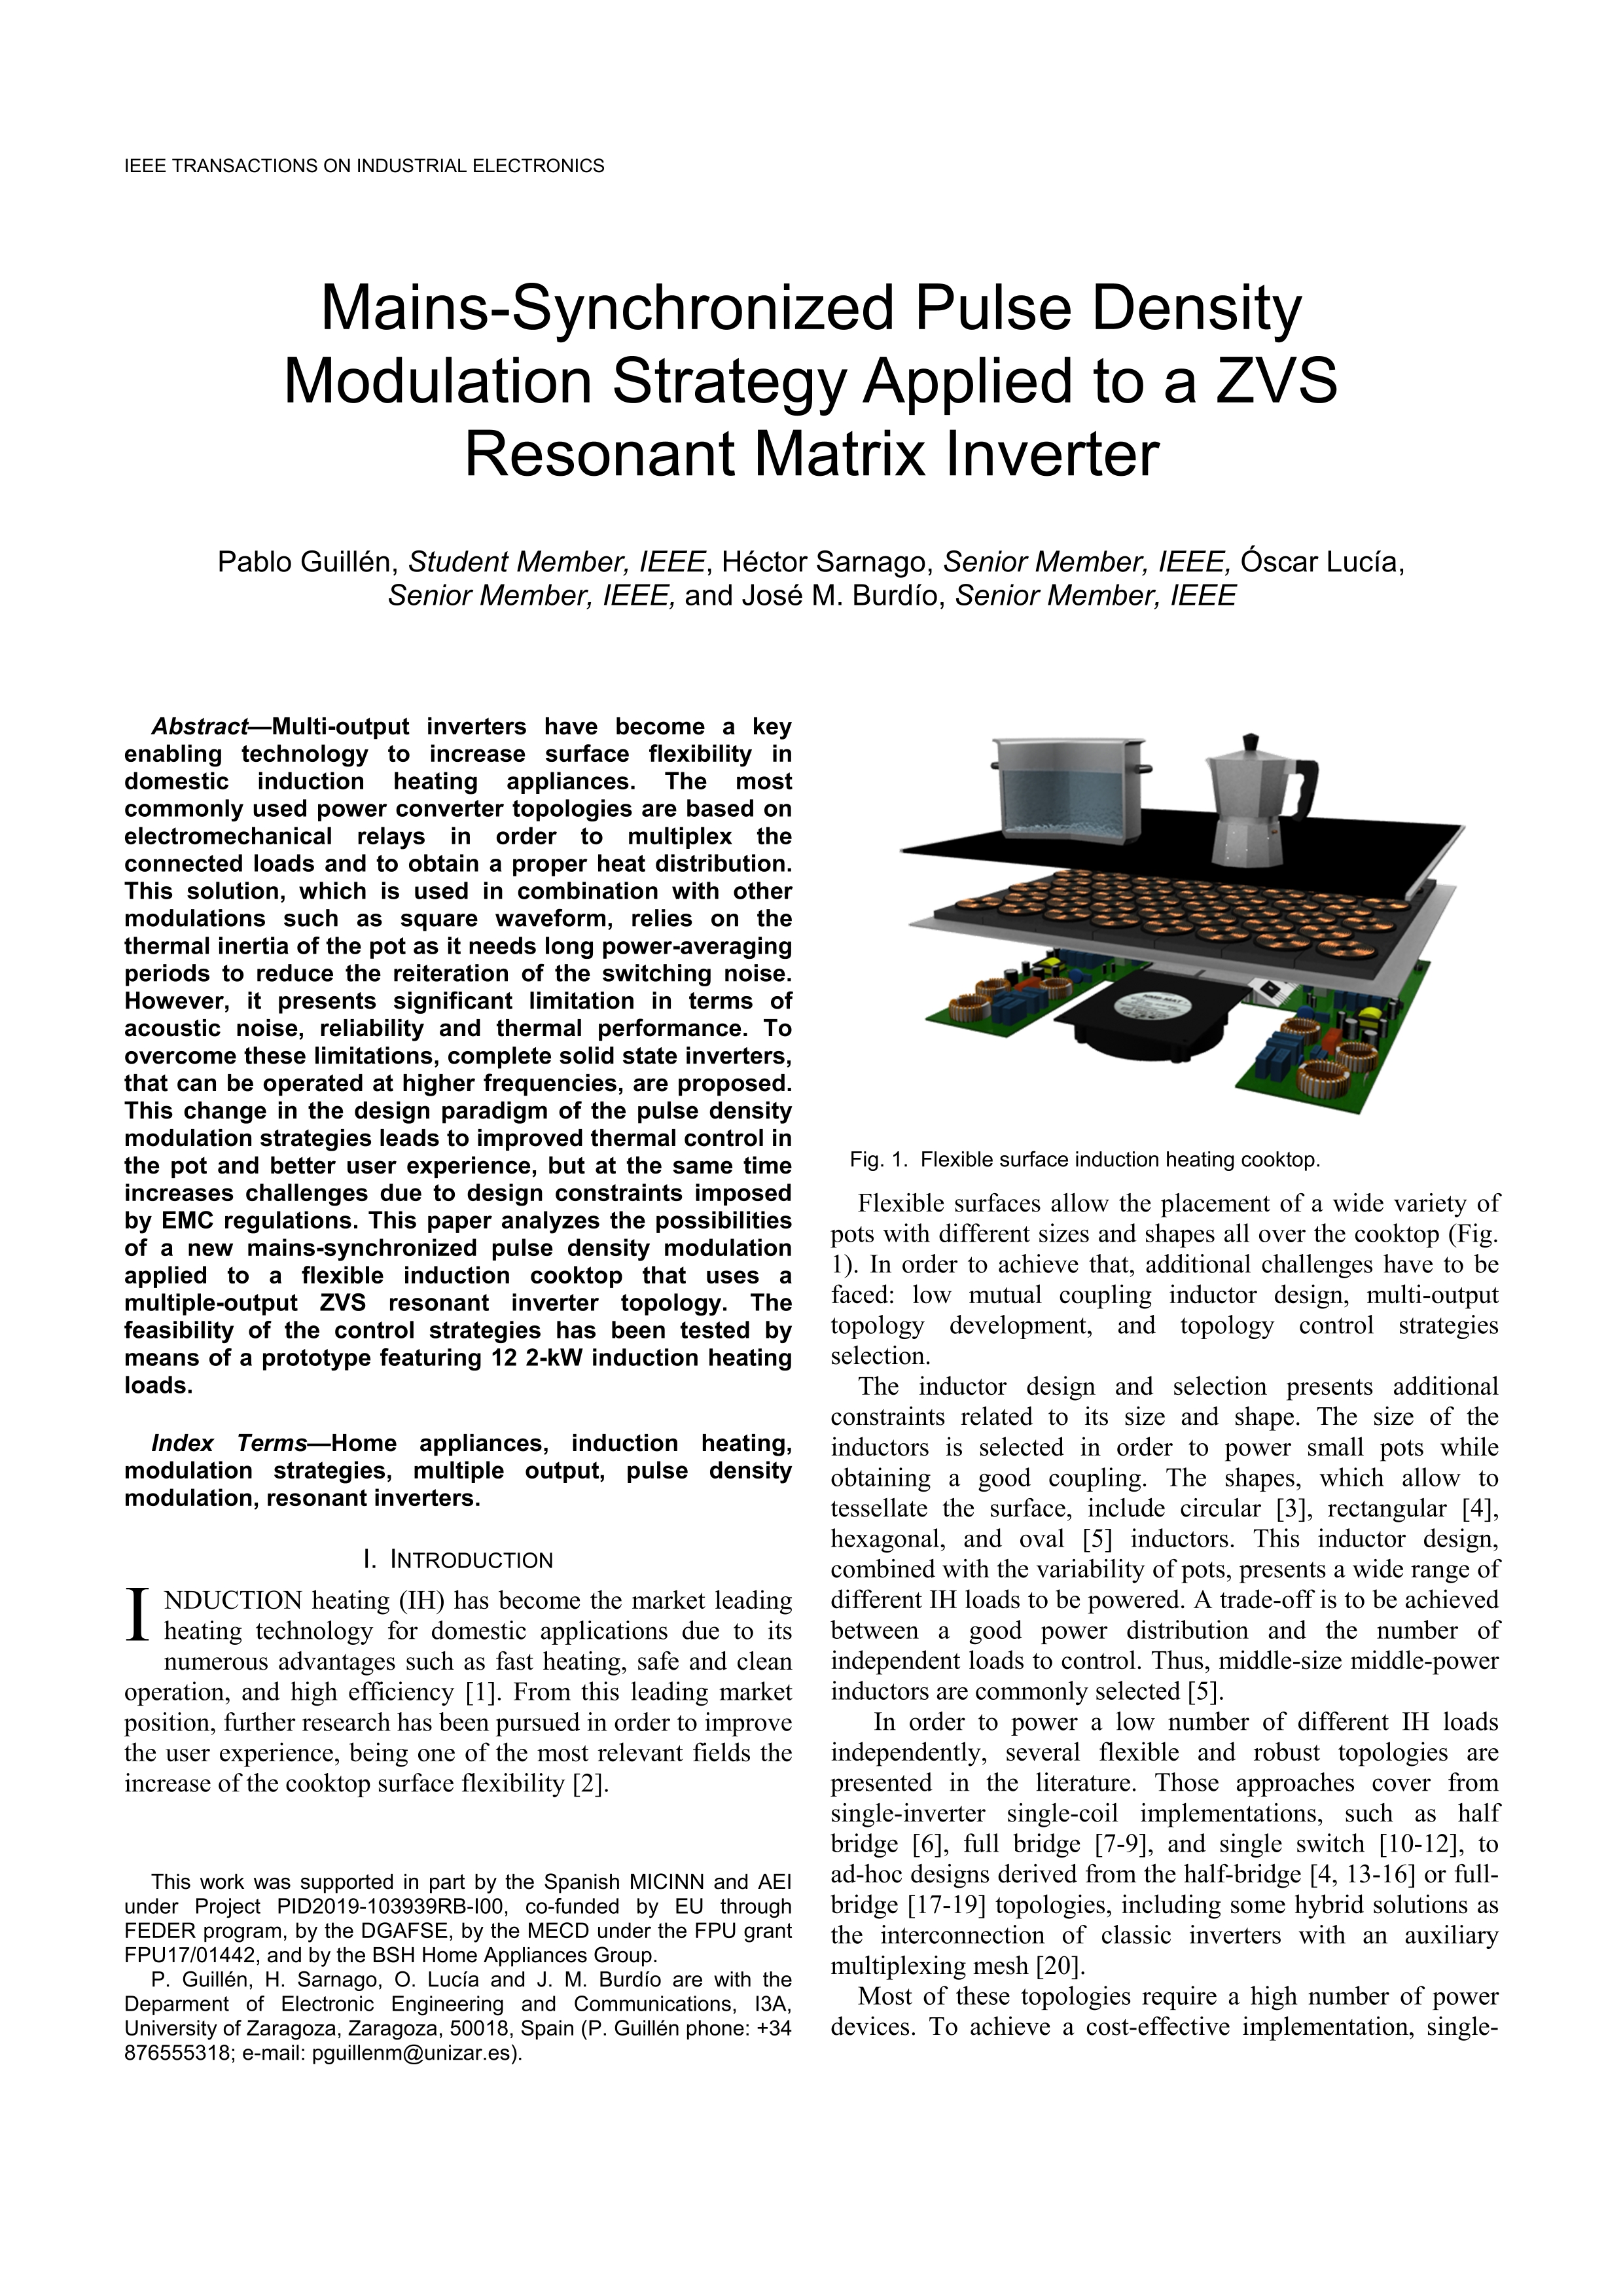 Mains-Synchronized Pulse Density Modulation Strategy Applied to a ZVS Resonant Matrix Inverter